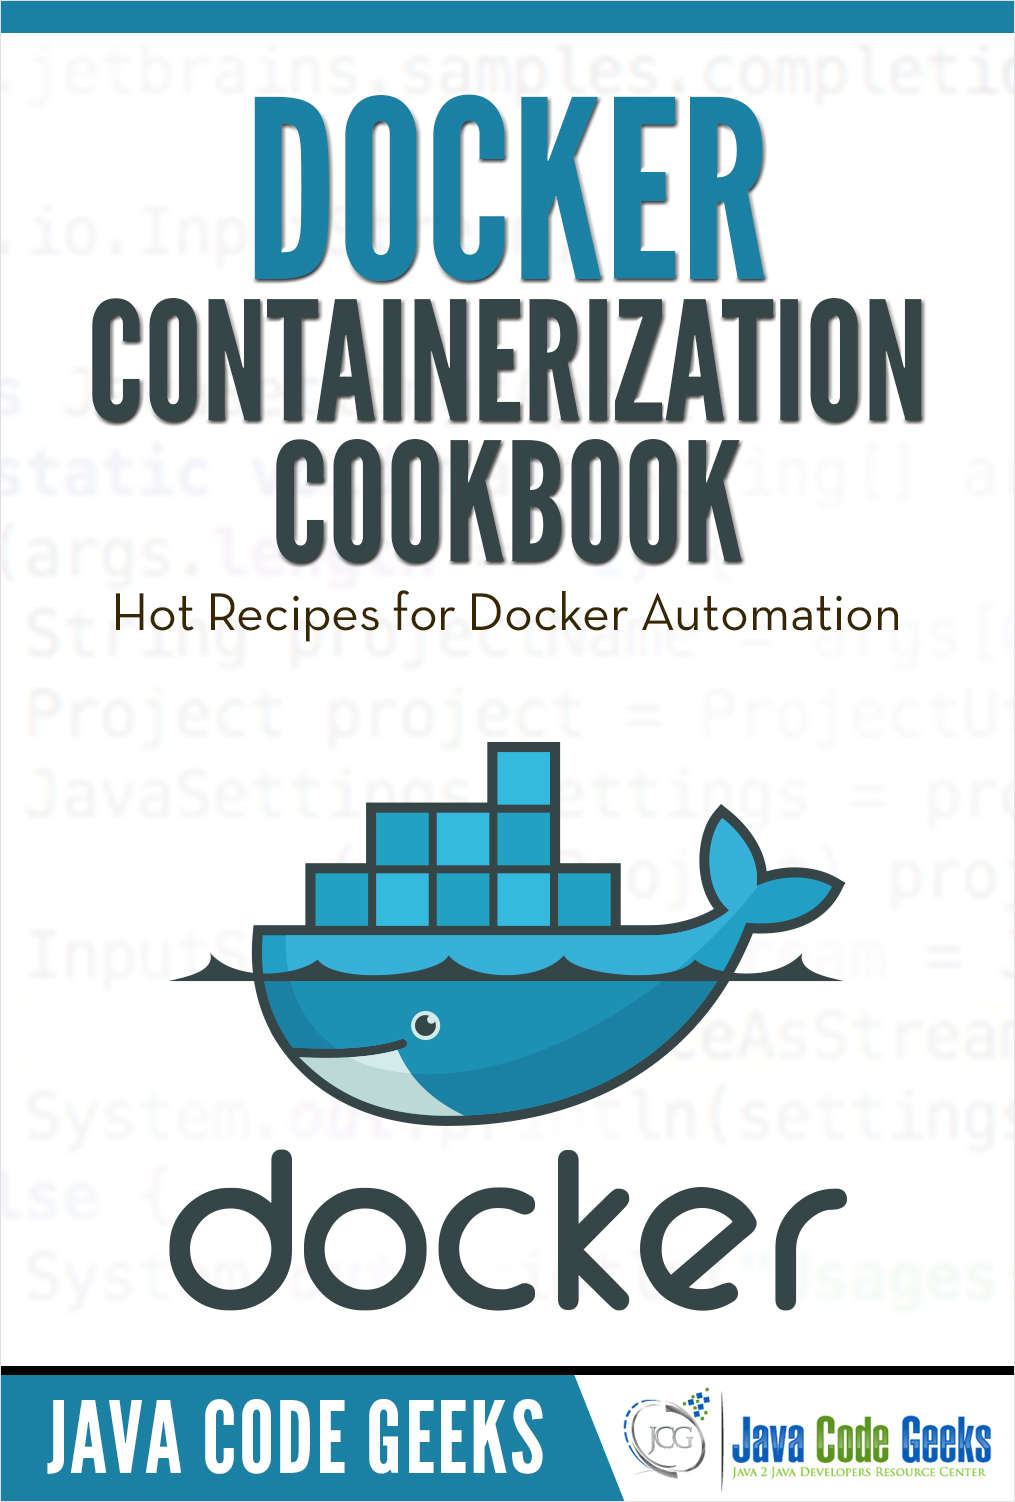 Docker Containerization Cookbook